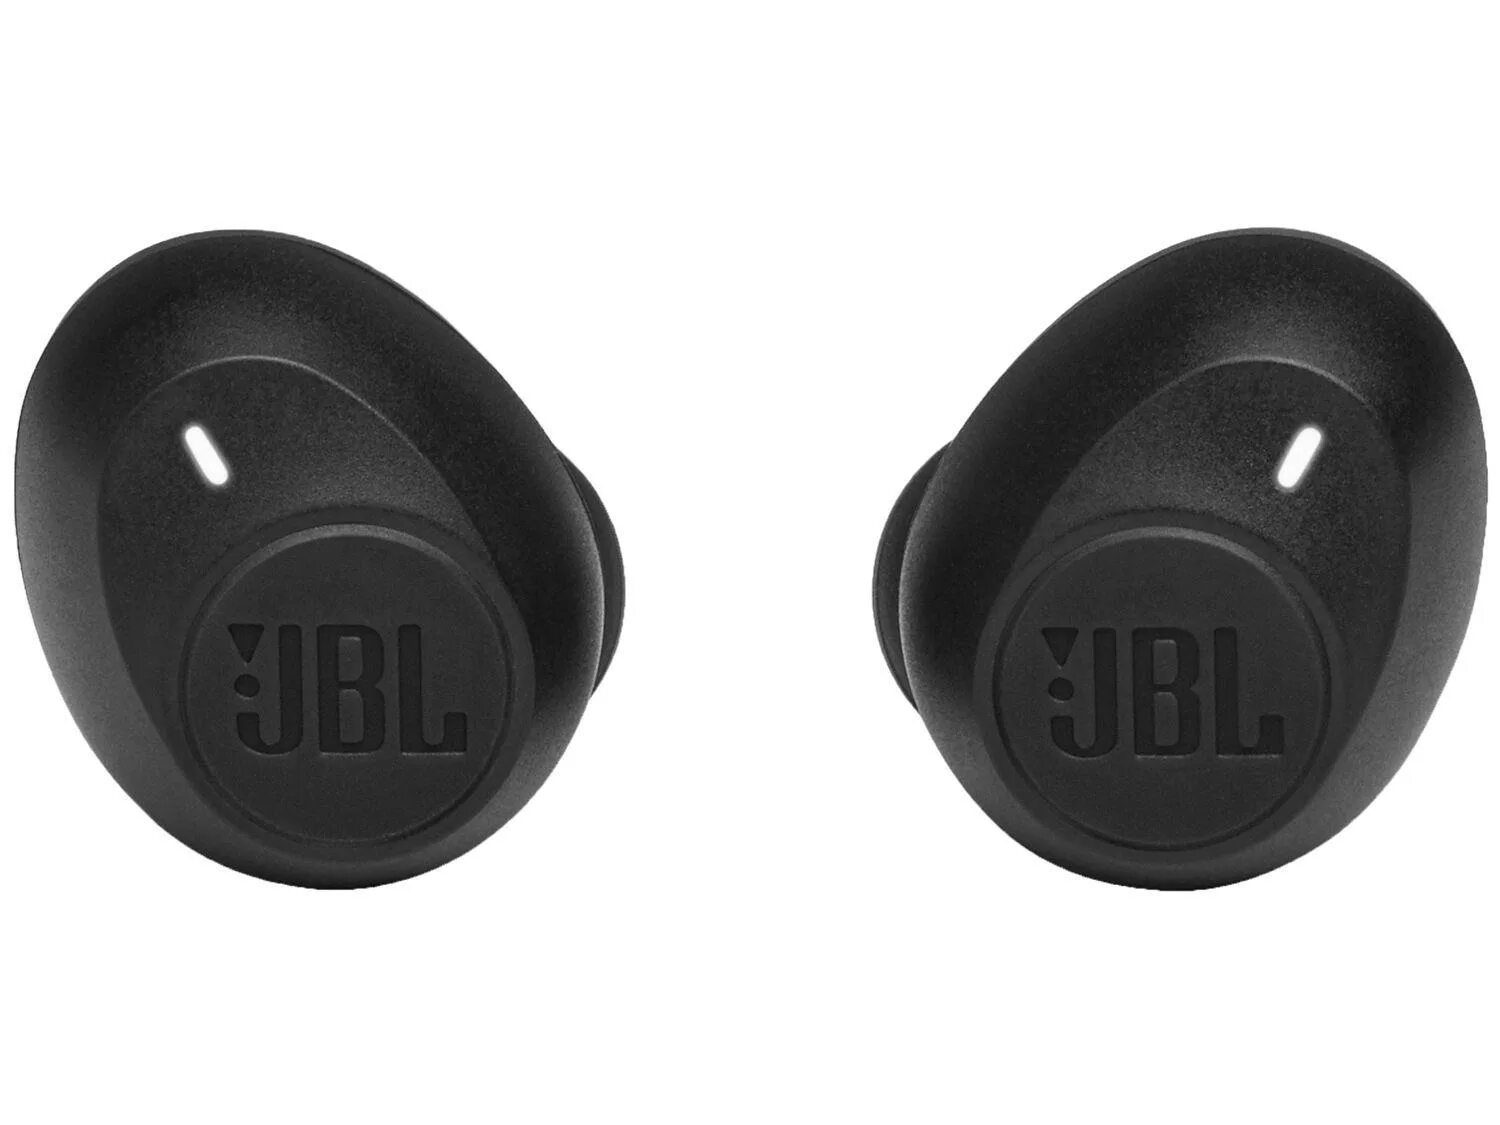 JBL Tune 115tws. JBL Tune 115tws (черный). JBL Tune 115 TWS Black jblt115twsblk. Беспроводные наушники JBL Tune 115 TWS. Tune 115 jbl беспроводные